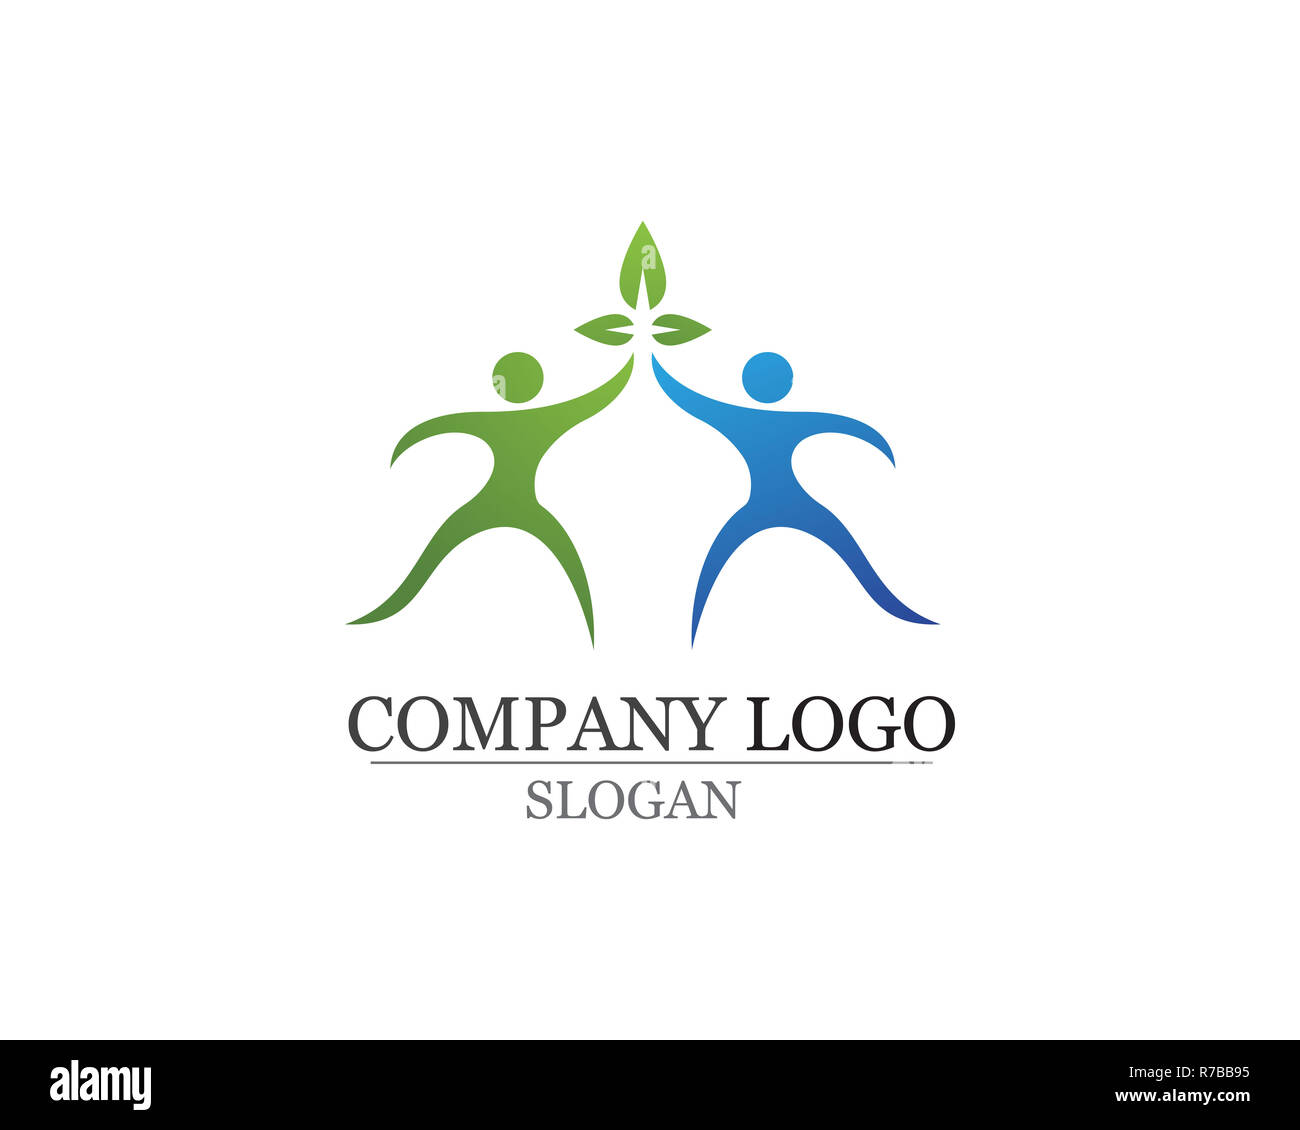 family care love logo and symbols template Stock Photo